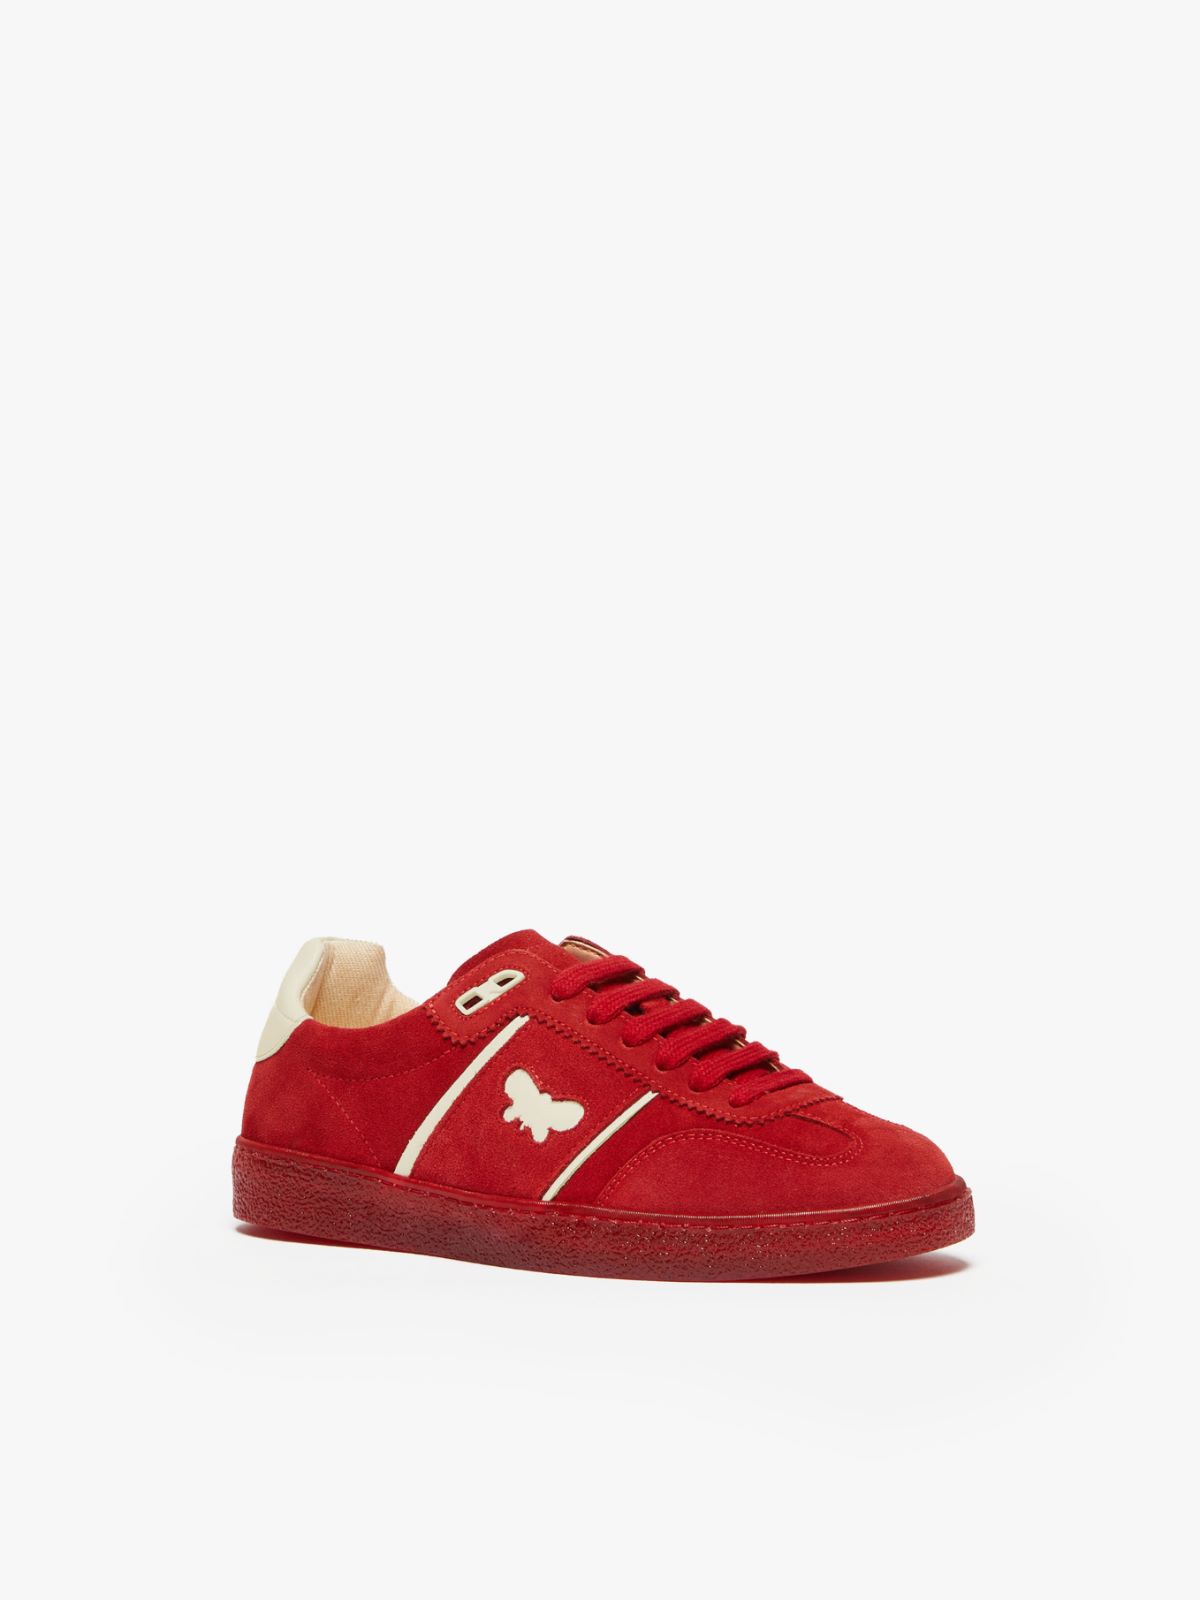 Lot of 2 Polo Ralph Lauren Canvas Sneakers Tennis Shoes Red & Black Men's 9  D | eBay